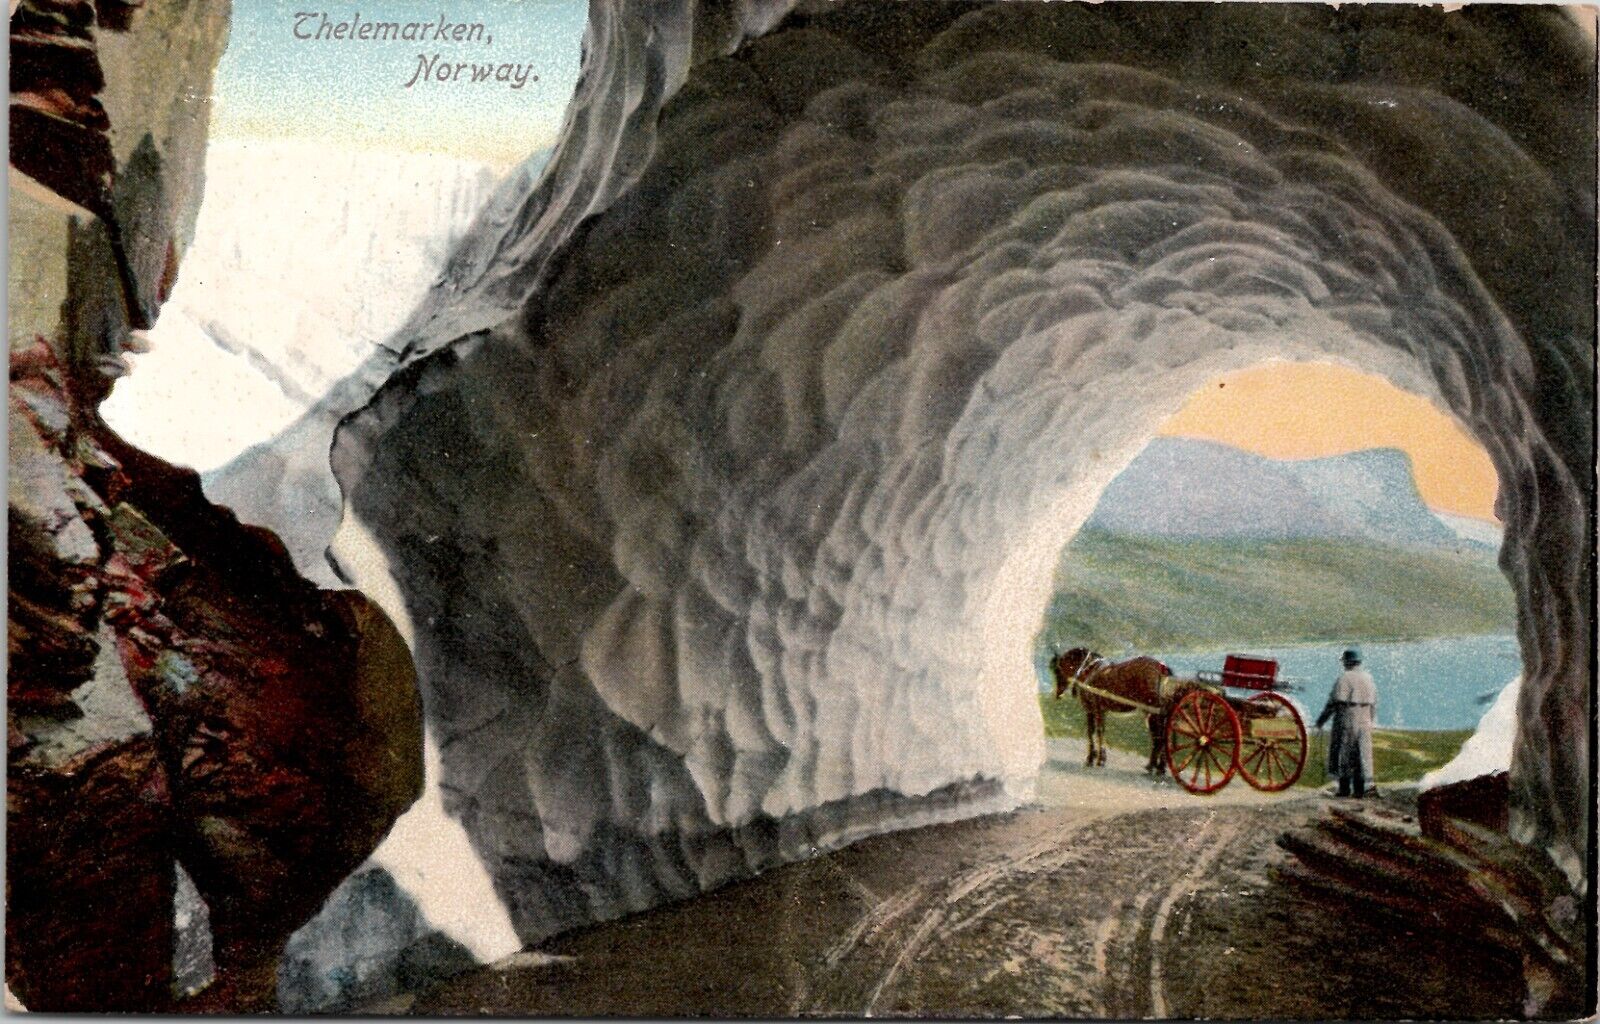 Thelemarken, Norway, Horse & Buggy Vintage Postcard Wps1